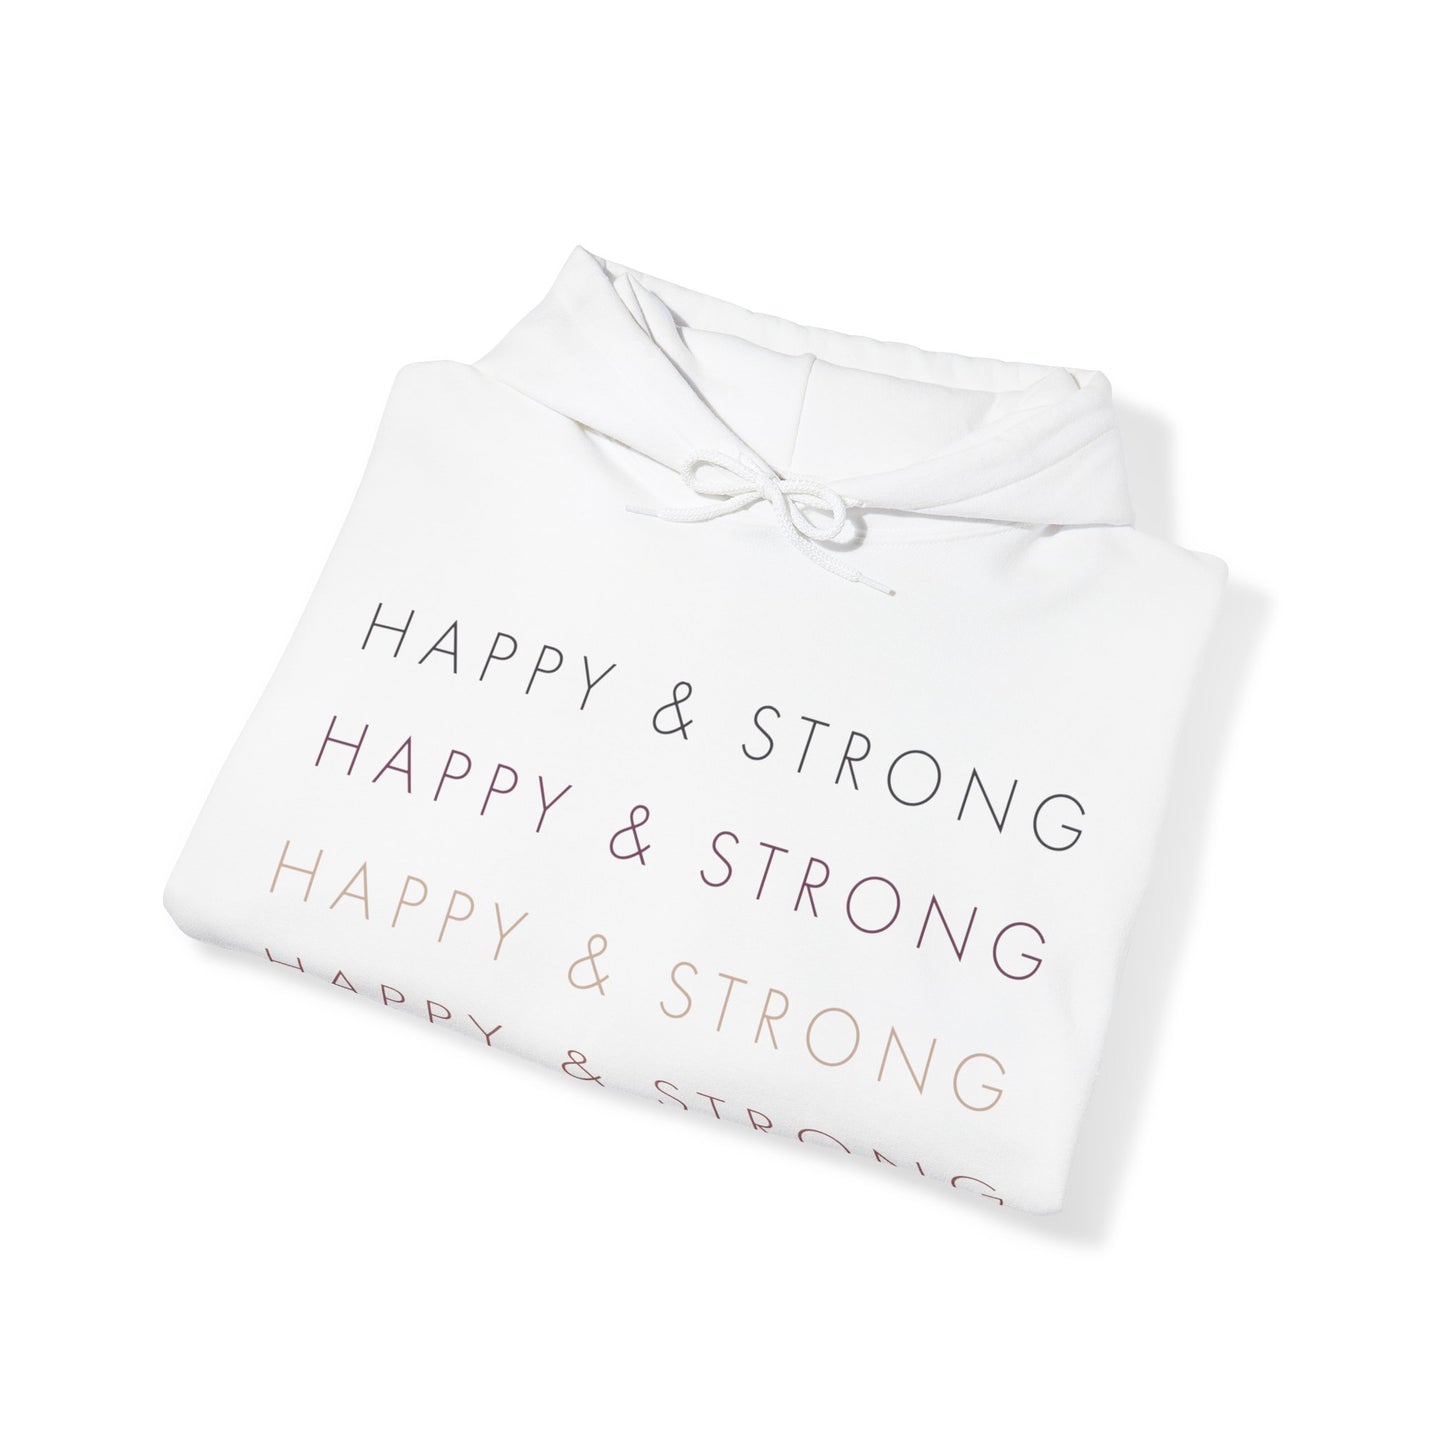 Happy & Strong on Repeat Women's Heavy Blend™ Hooded Sweatshirt